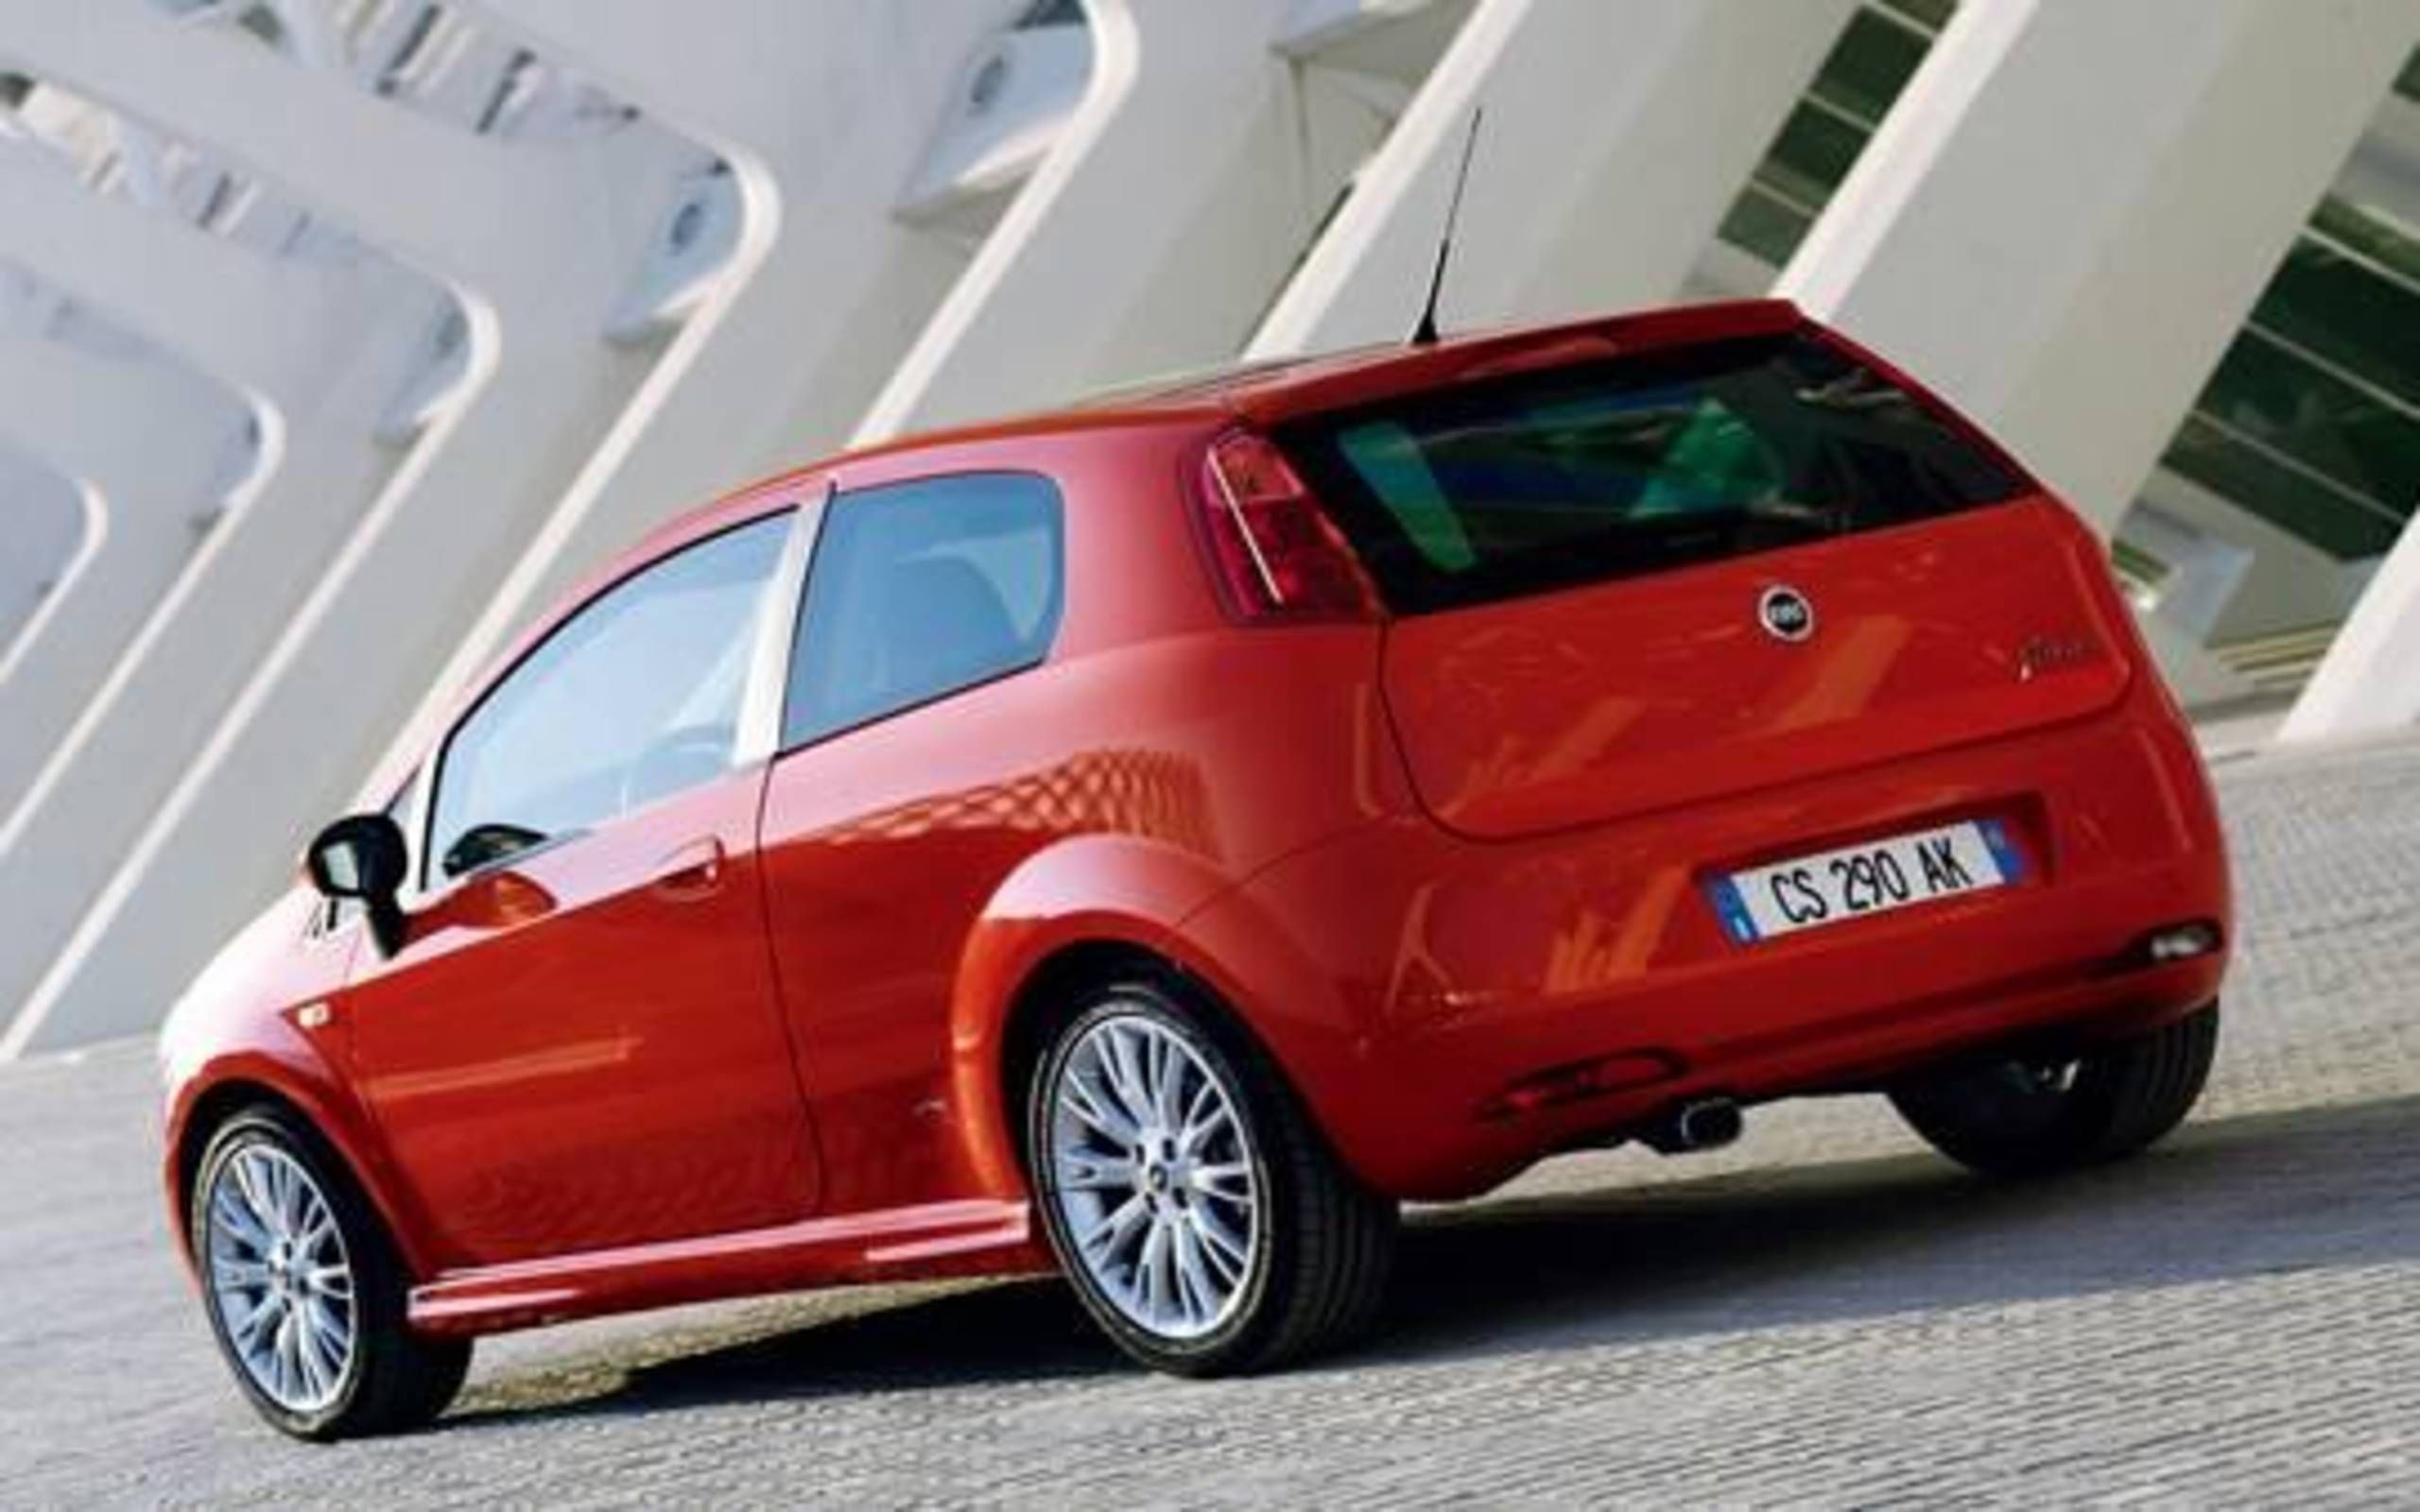 2006 Fiat Grande Punto: The heavy bleeding has stopped at Fiat. Thank the  Grande Punto